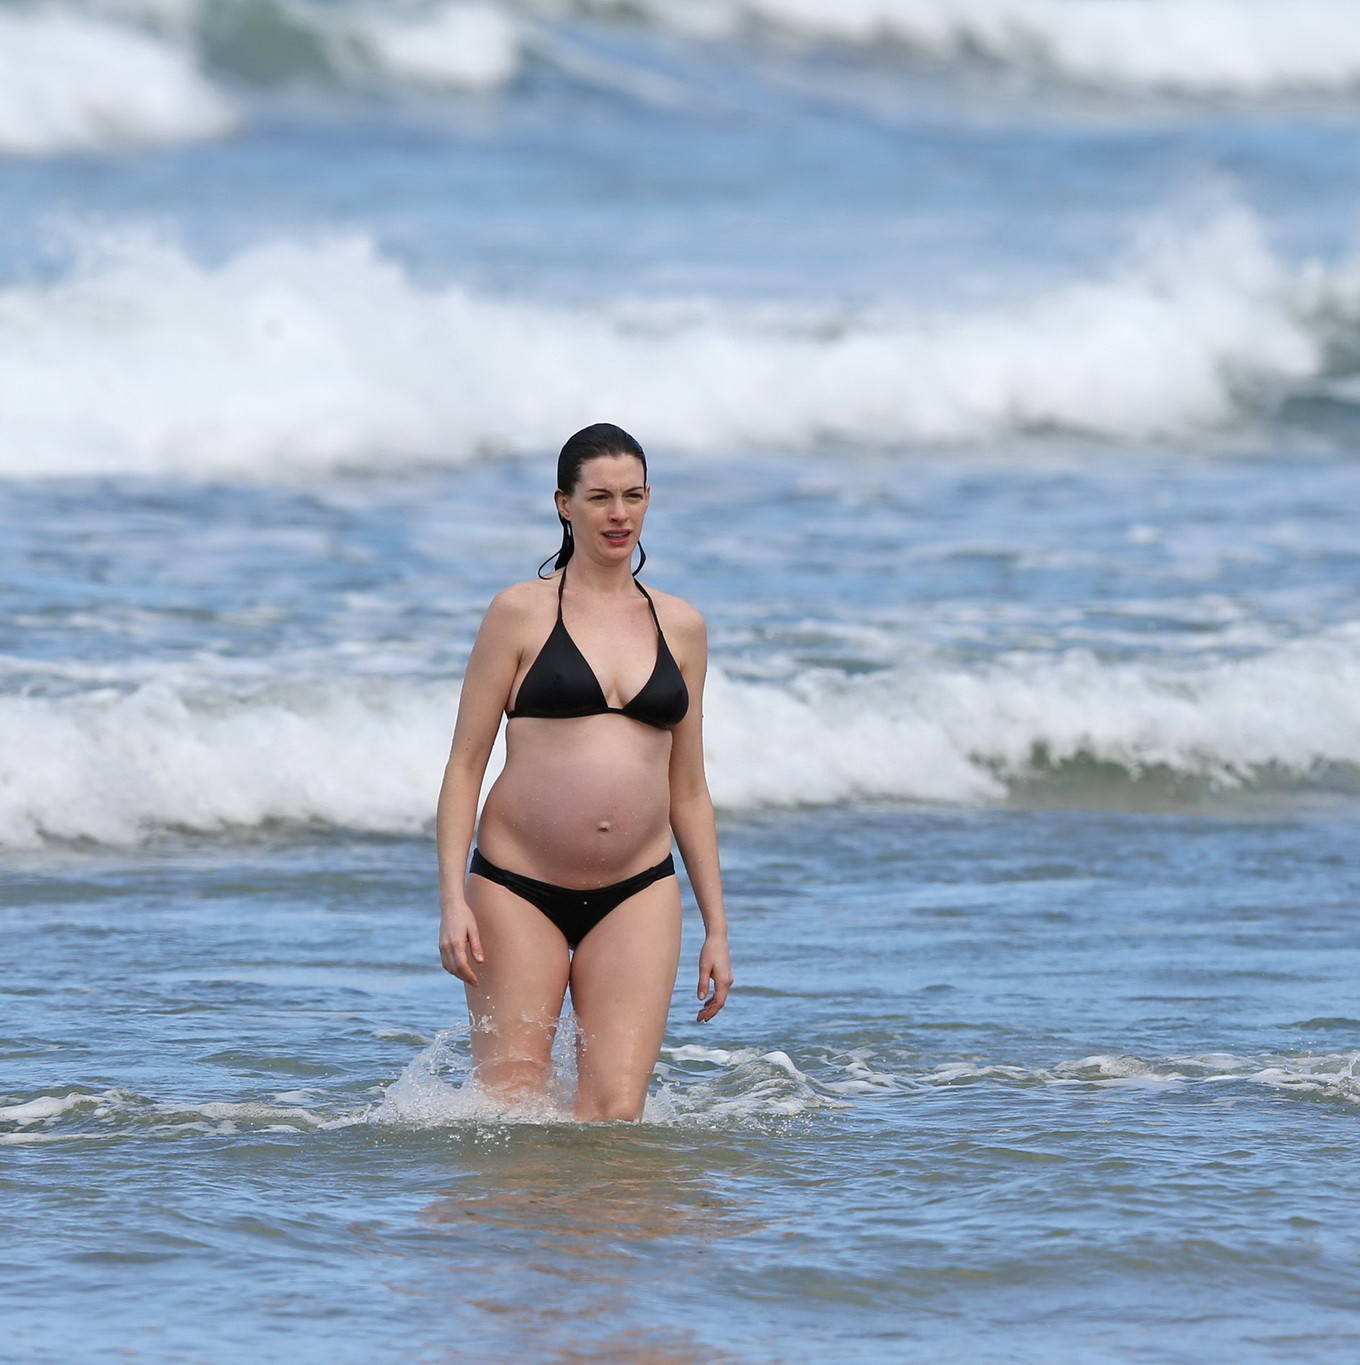 Anne Hathaway pregnant showing pokies in black bikini